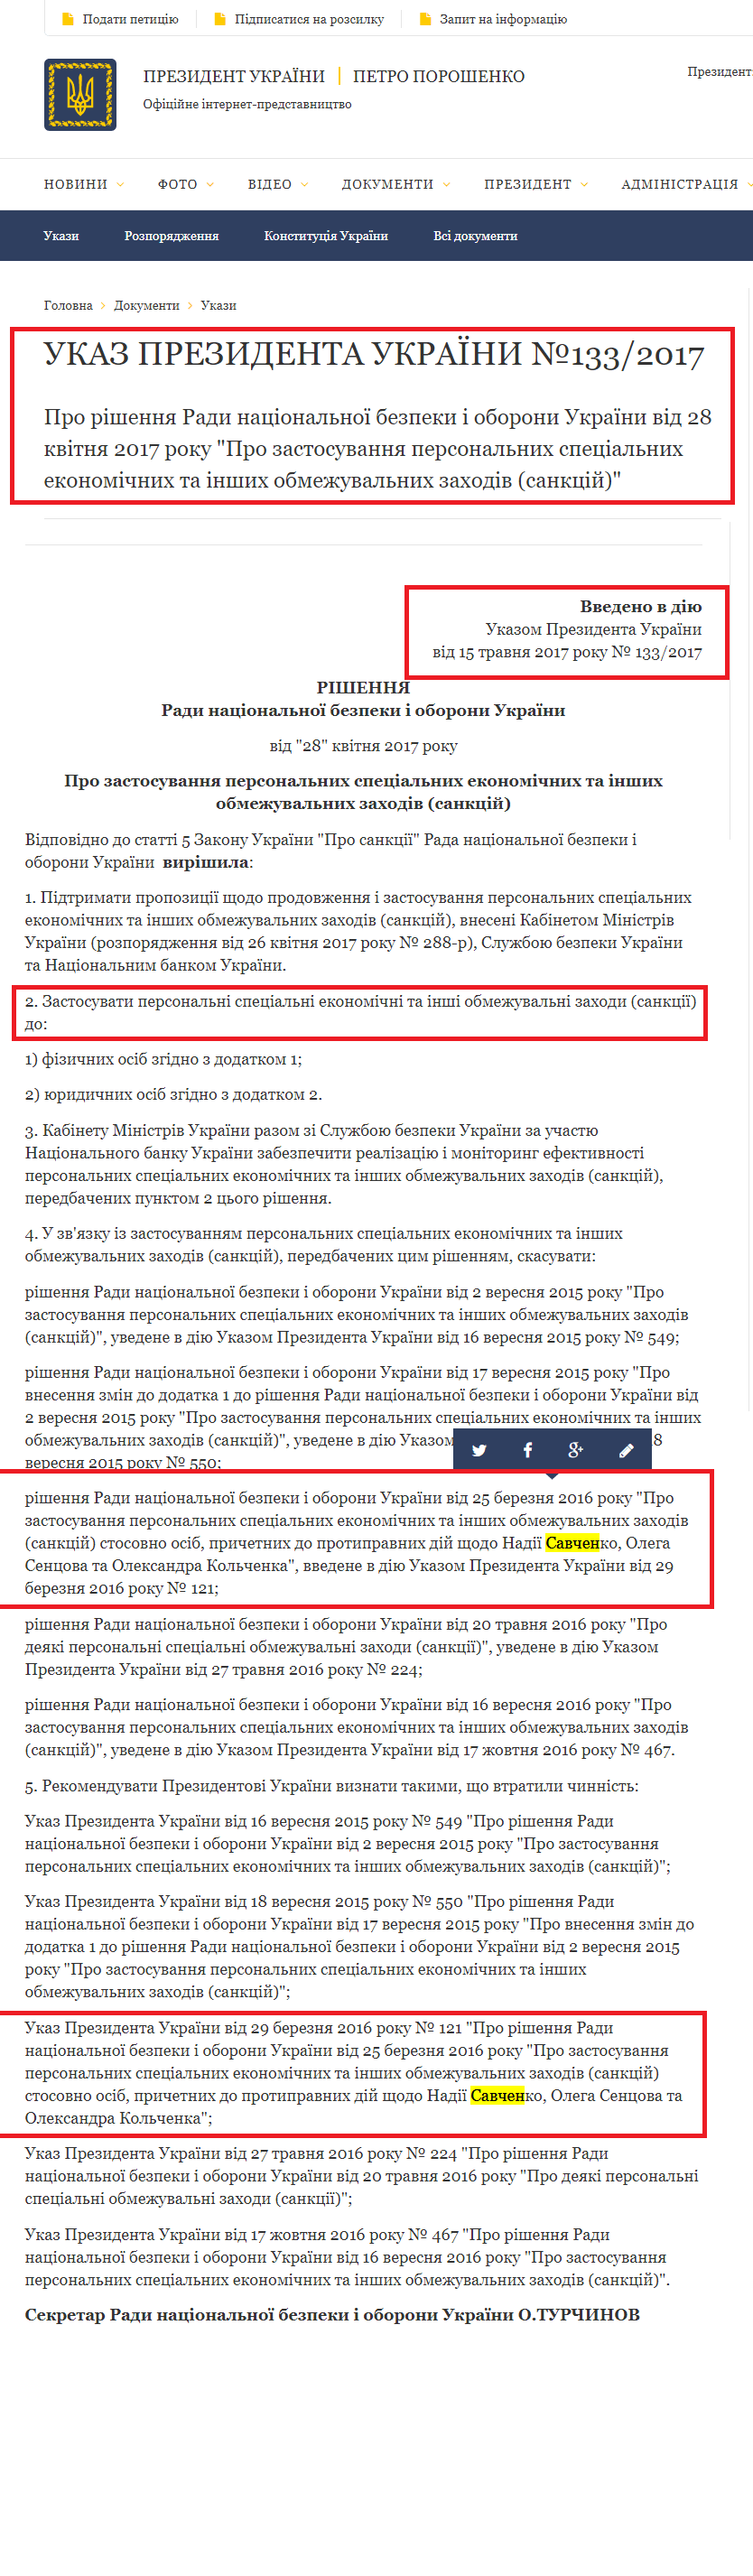 http://www.president.gov.ua/documents/1332017-21850